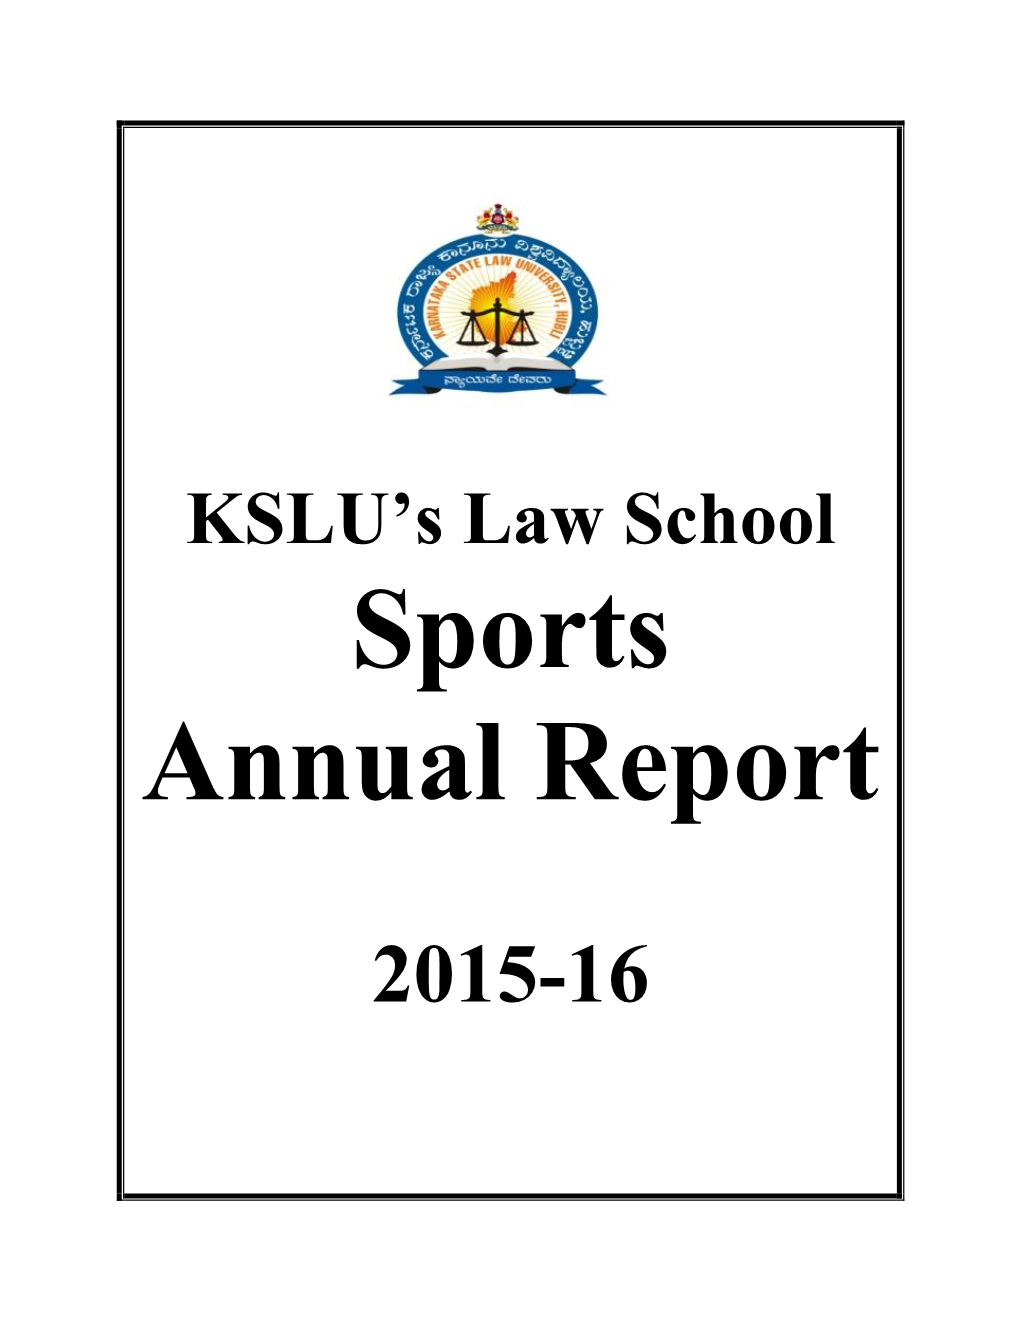 KSLU's Law School